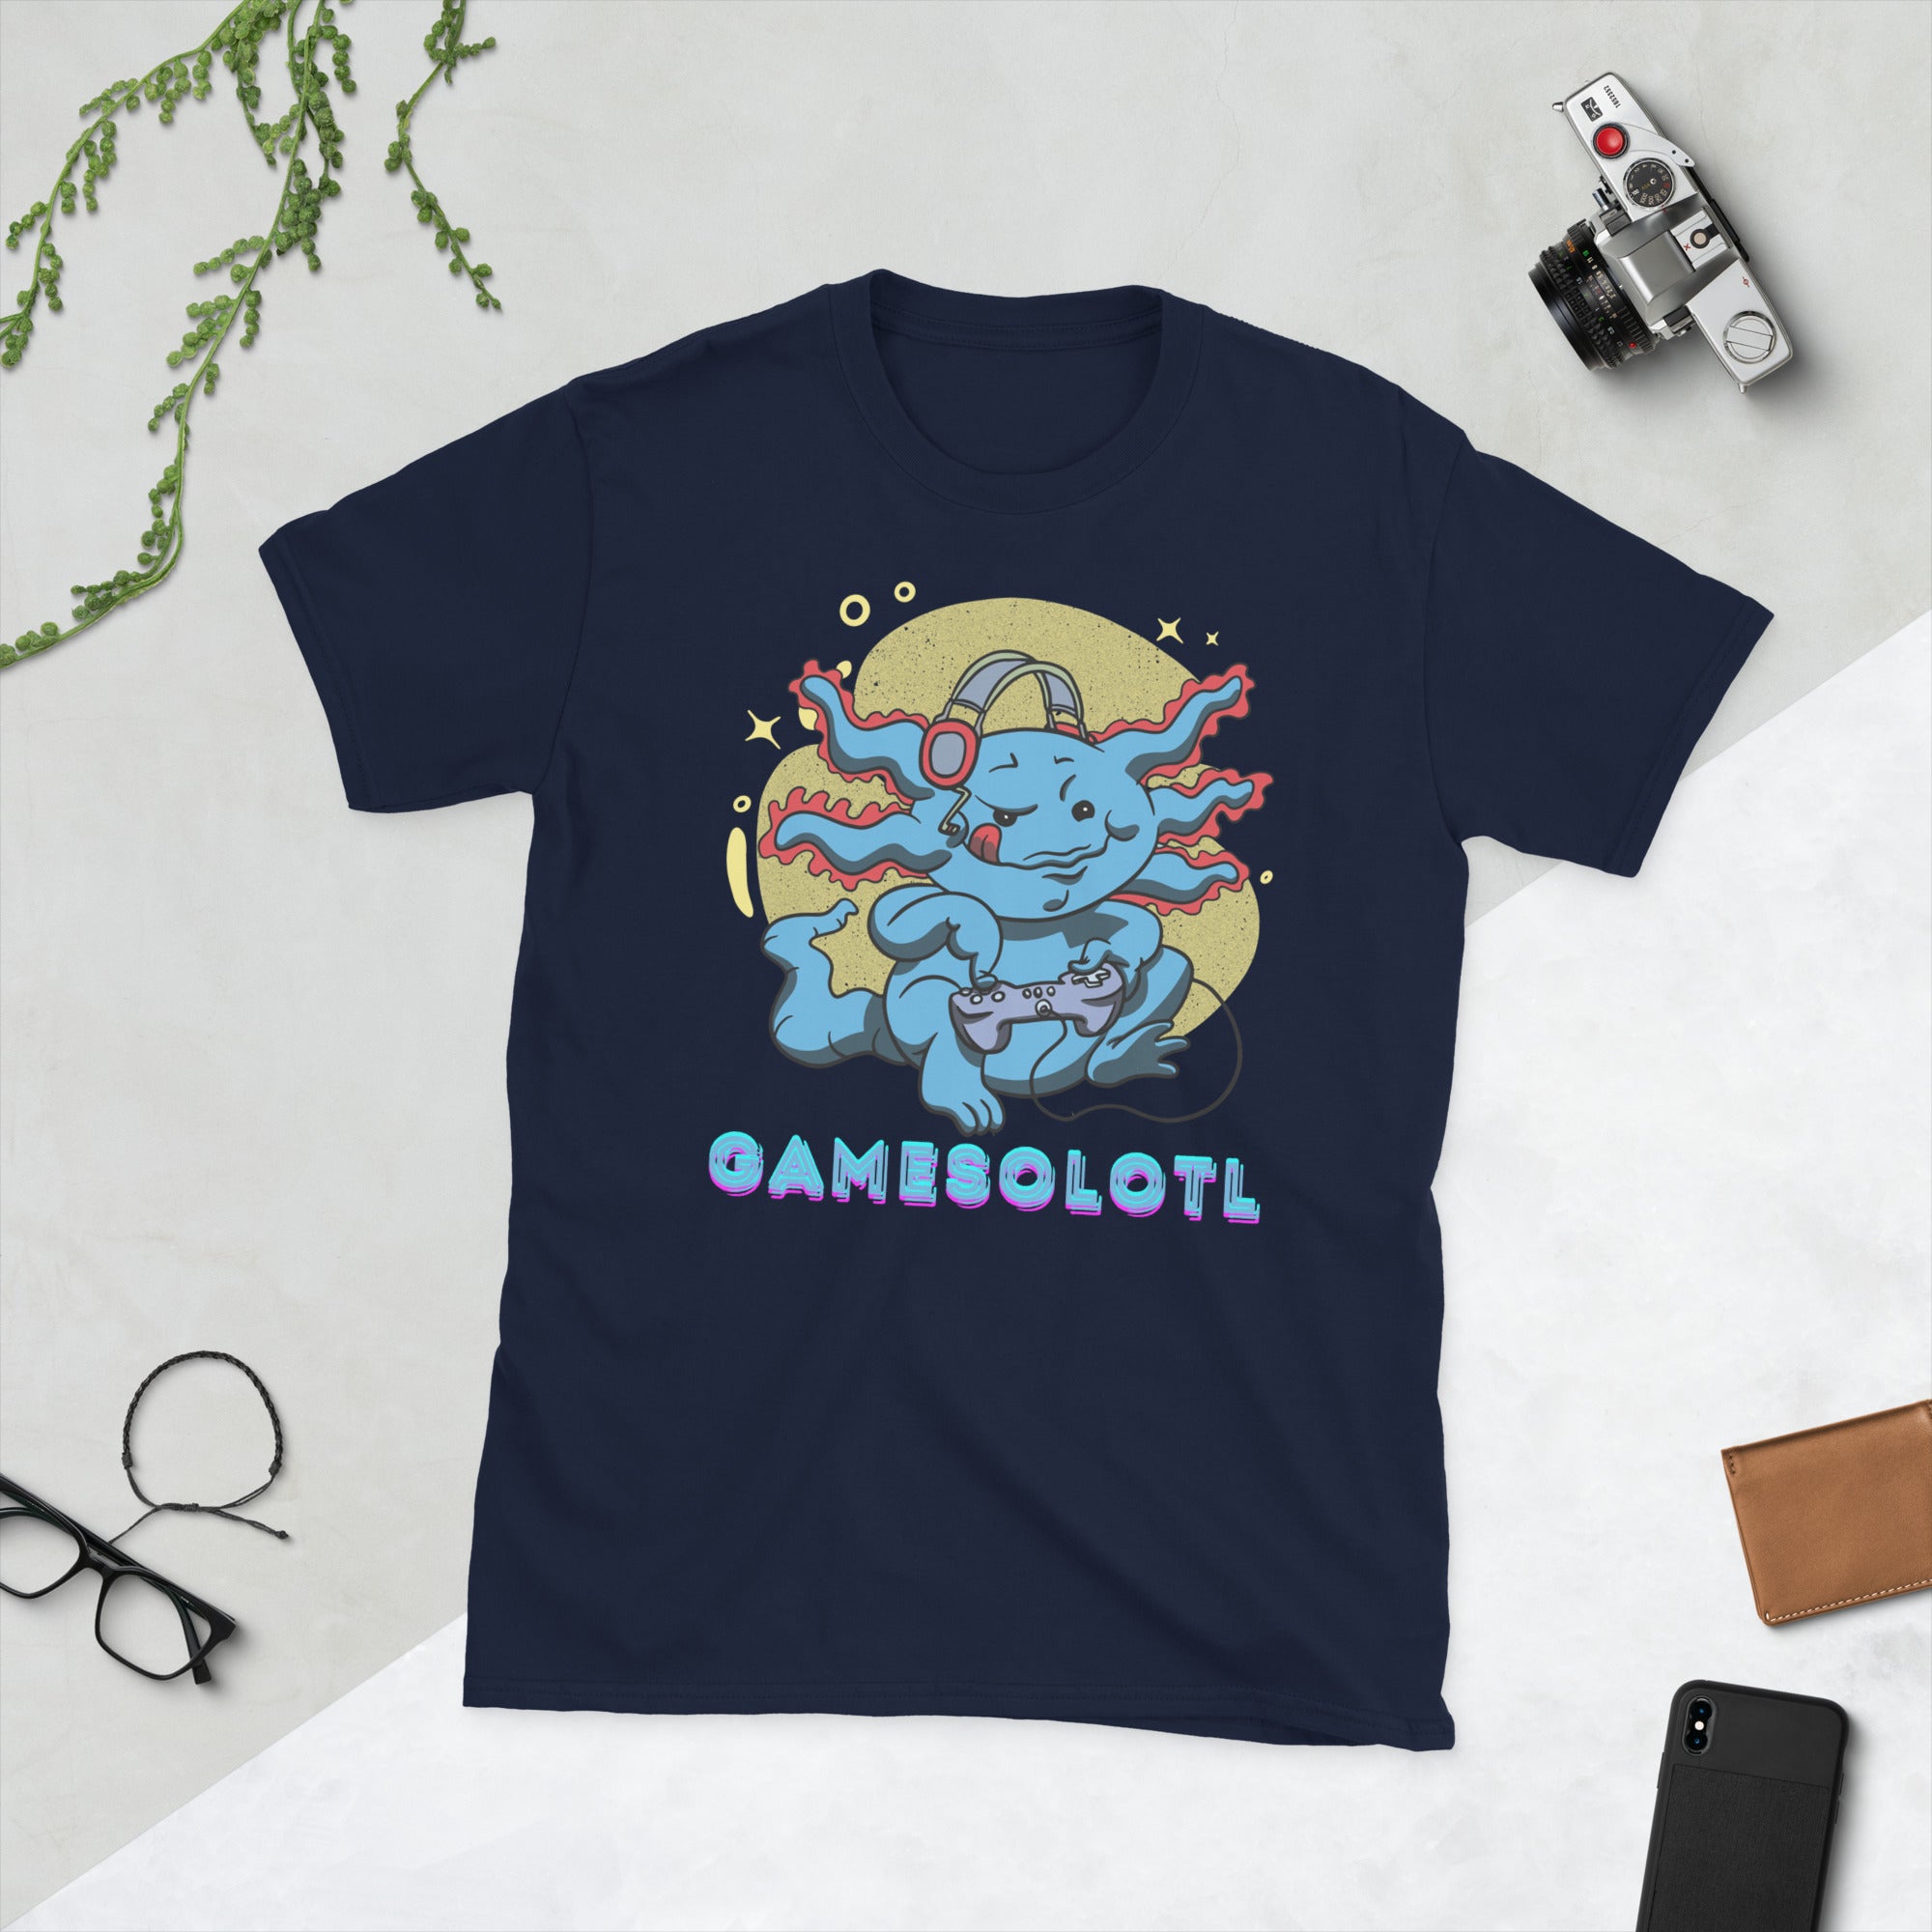 Gamesolotl Gamer Shirt, Games-o-Lotl Gaming Lizard T-shirt, Video Games Lizard Funny Tee, Cute Axolotl T-Shirt, Gift for Video Game Lovers - Madeinsea©